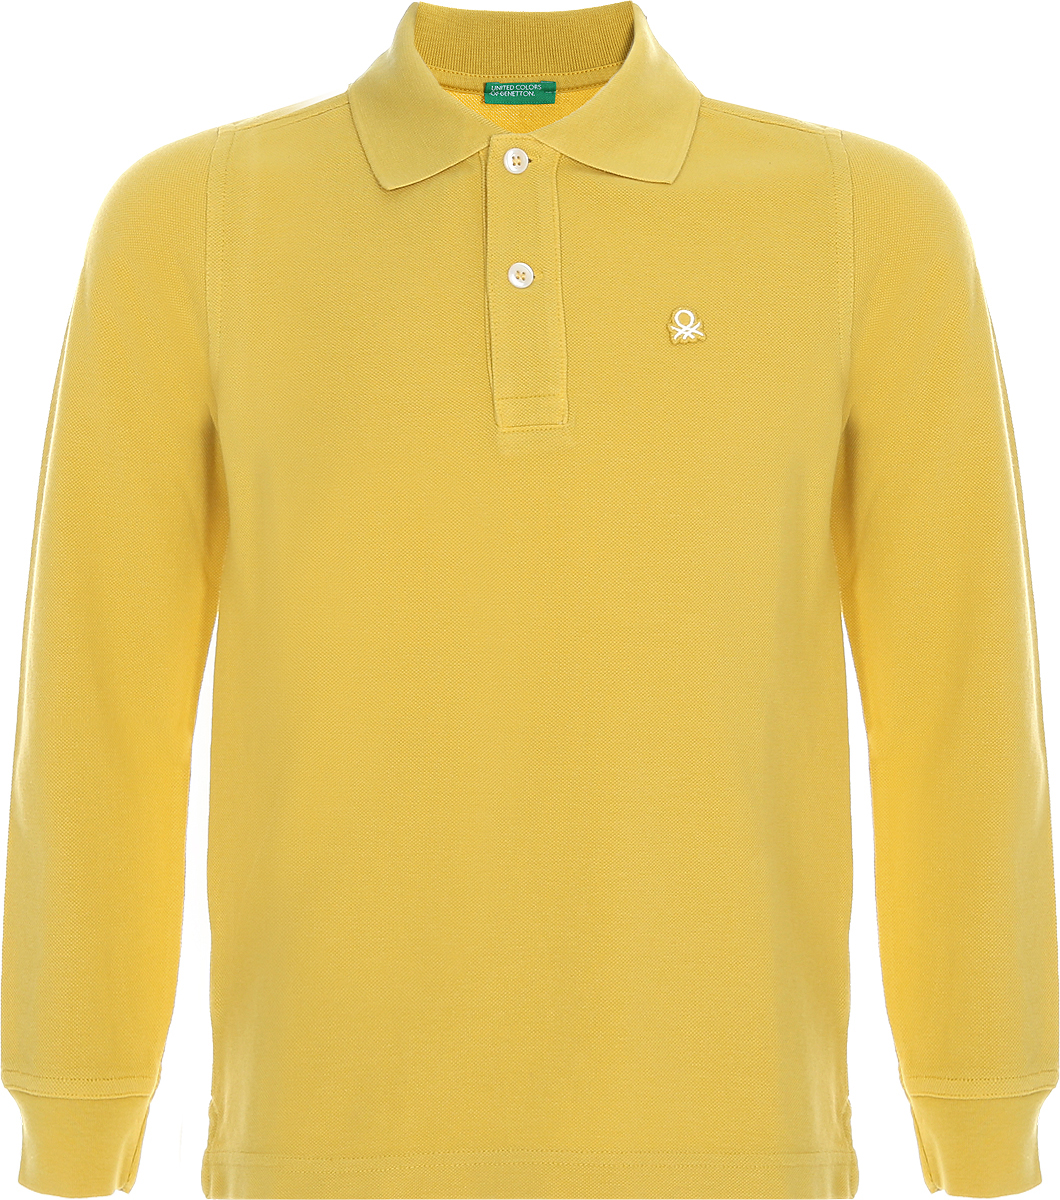 Кофта для мальчика United Colors of Benetton, цвет: желтый. 3089C3090_36H. Размер 90